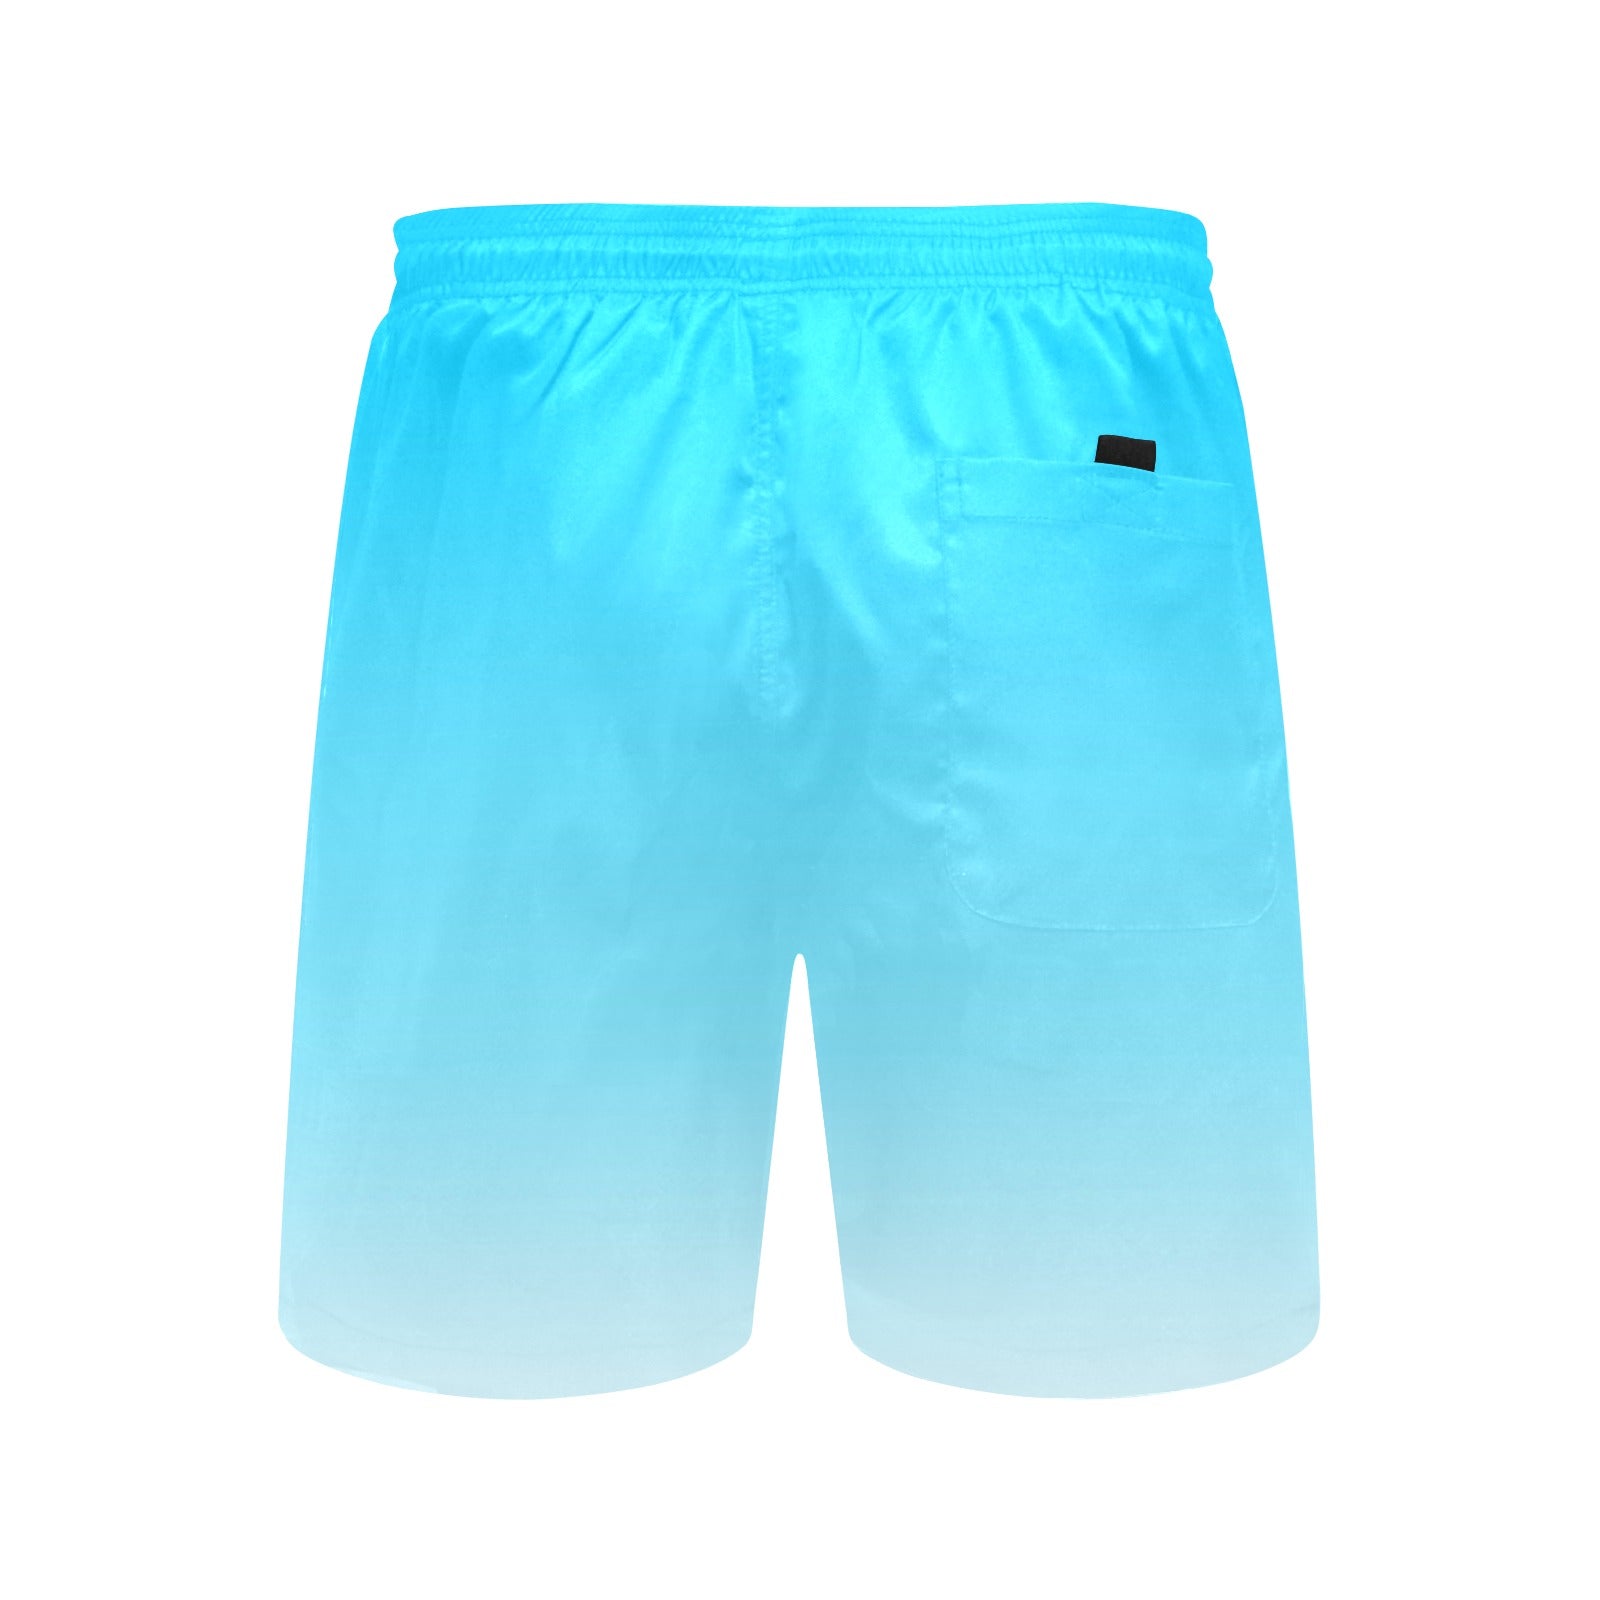 Blue Ombre Men Swim Trunks, Mid Length Shorts Aqua Beach Pockets Mesh Lining Drawstring Boys Casual Bathing Suit Plus Size Swimwear Starcove Fashion